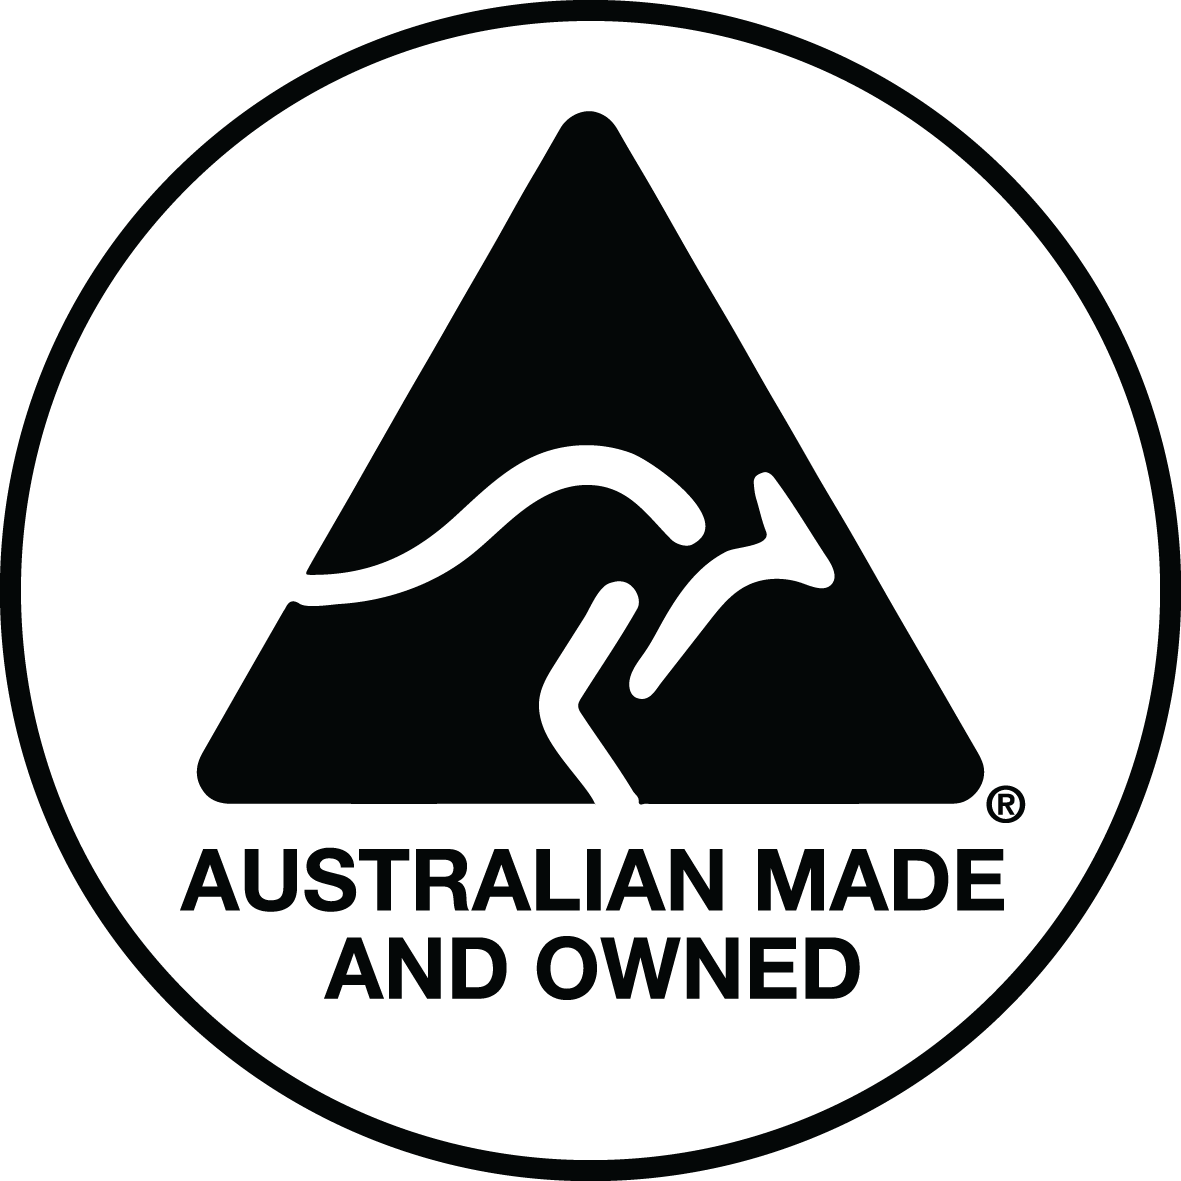 Australia Logo Australian Made Organization Free Download Image Clipart